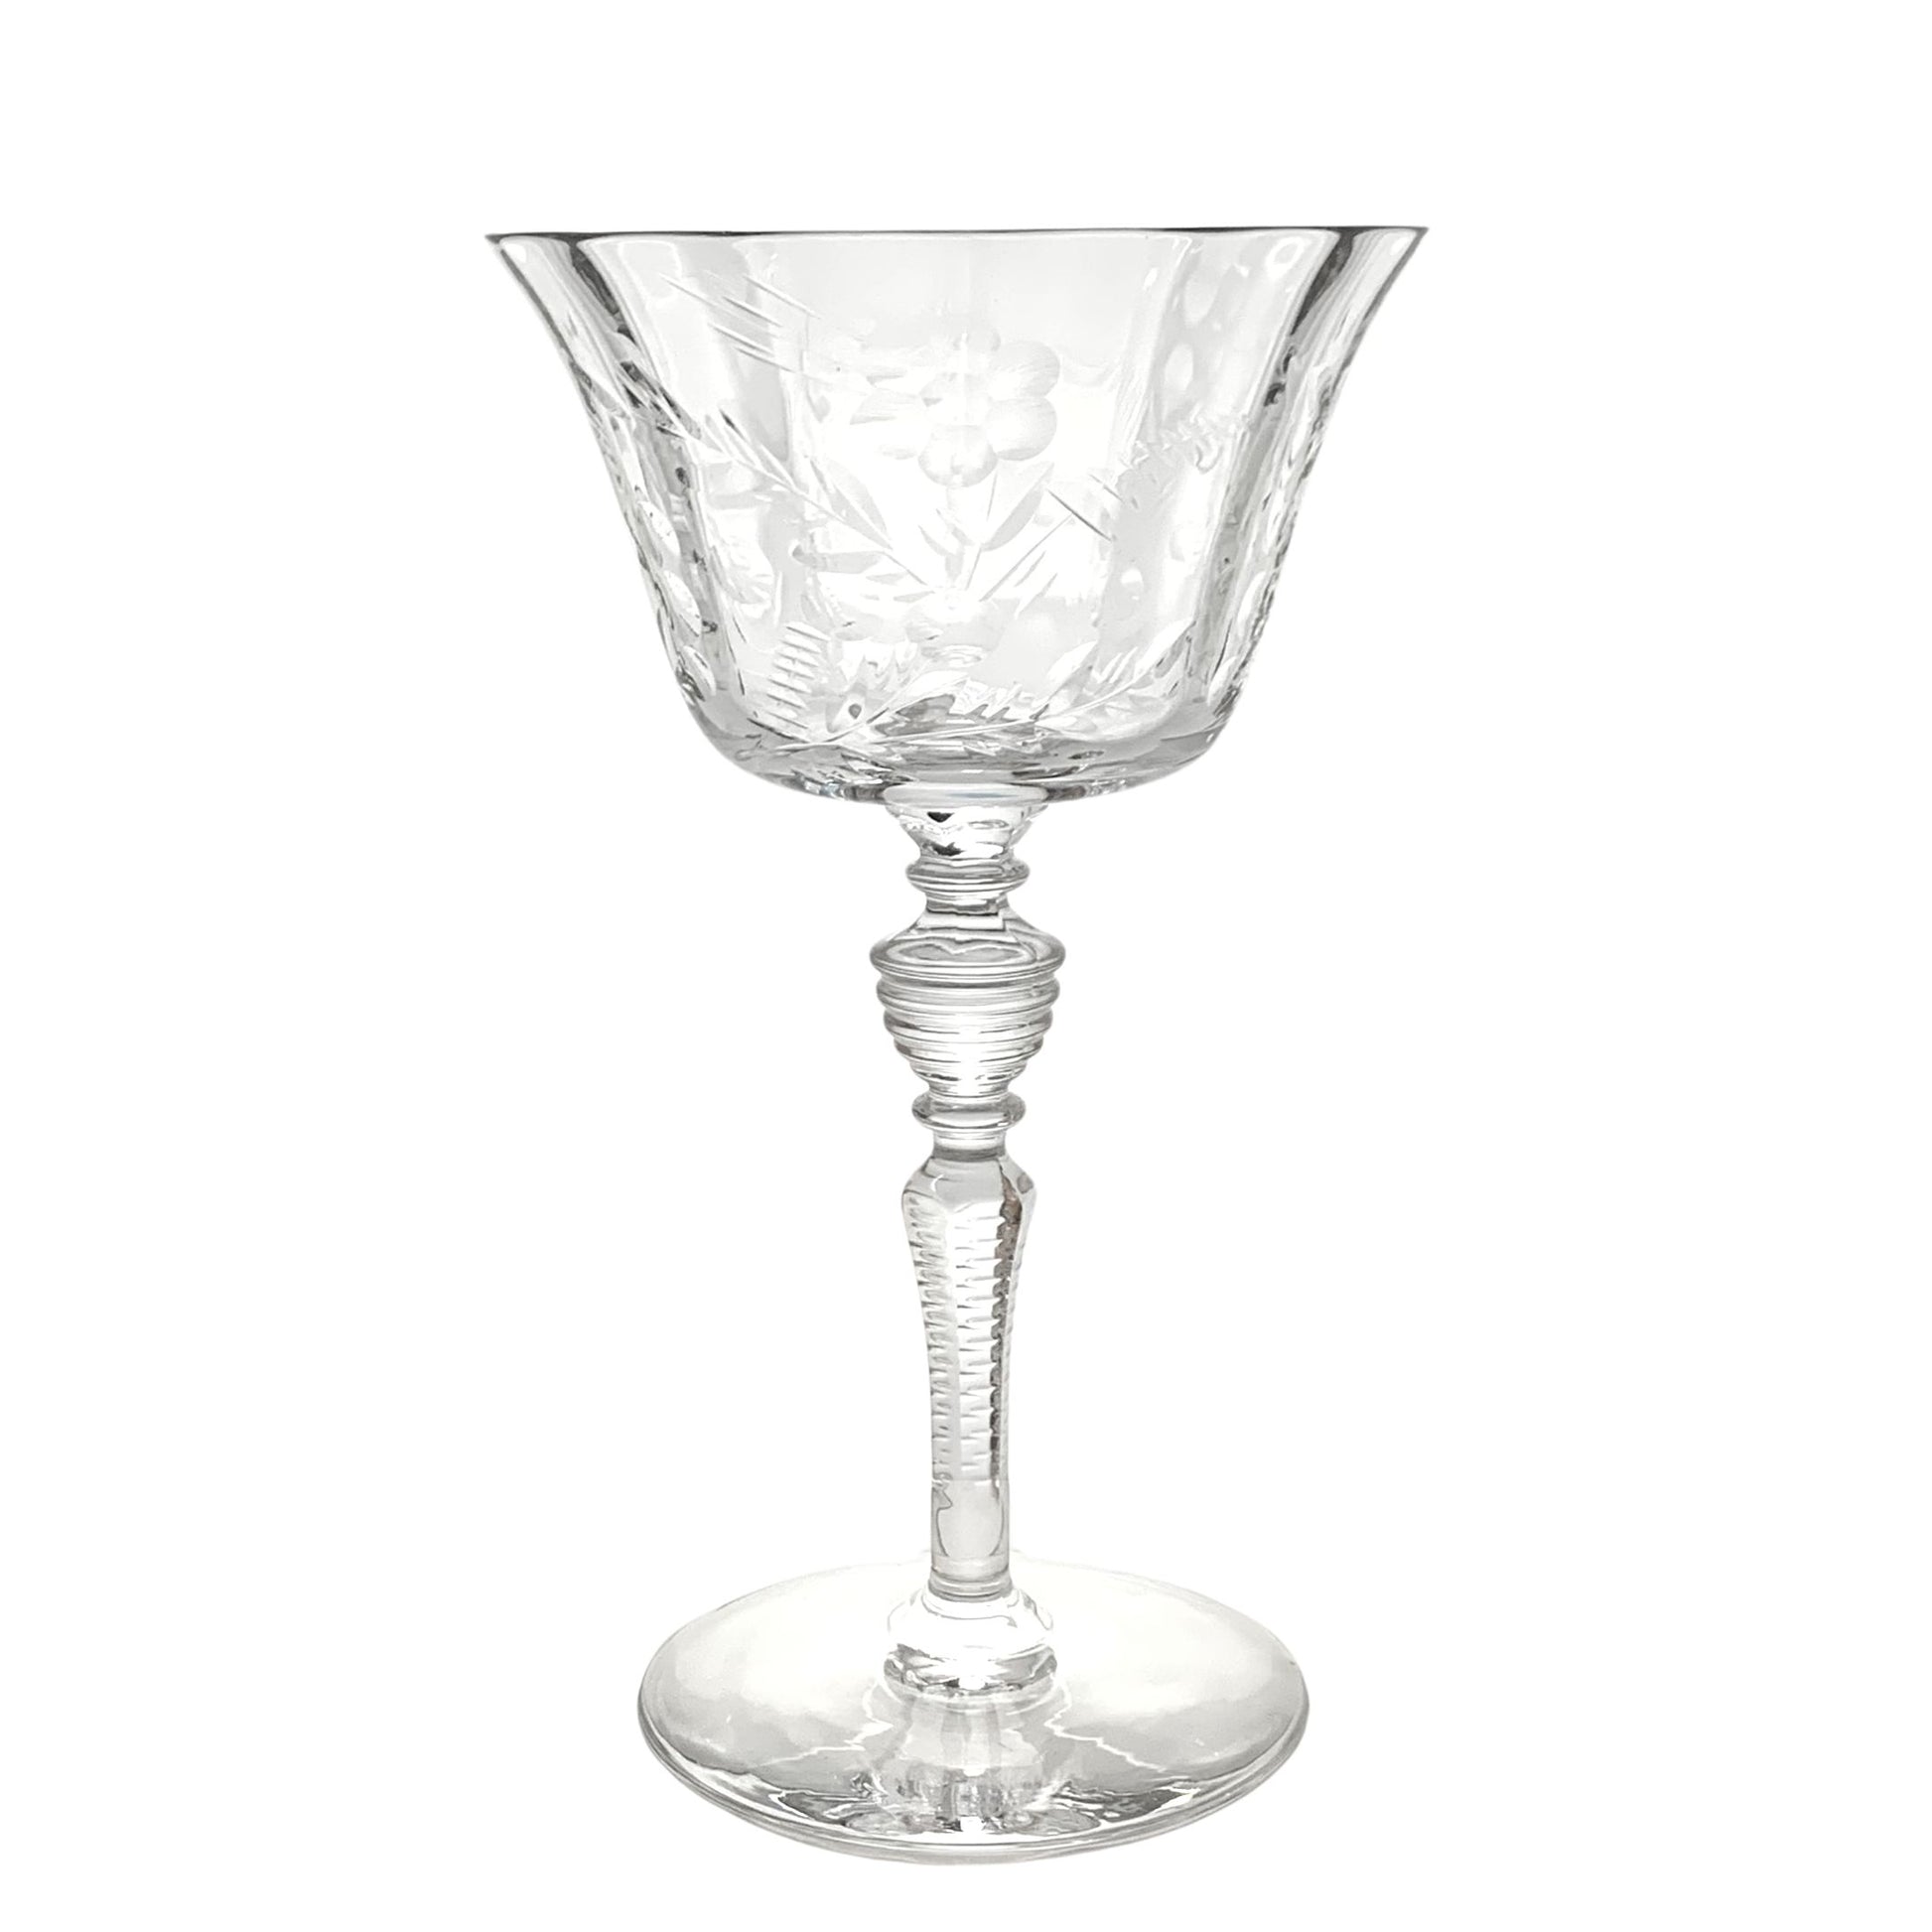 6 Vintage Etched Tall Wine Glasses Water Goblets, Rock Sharpe